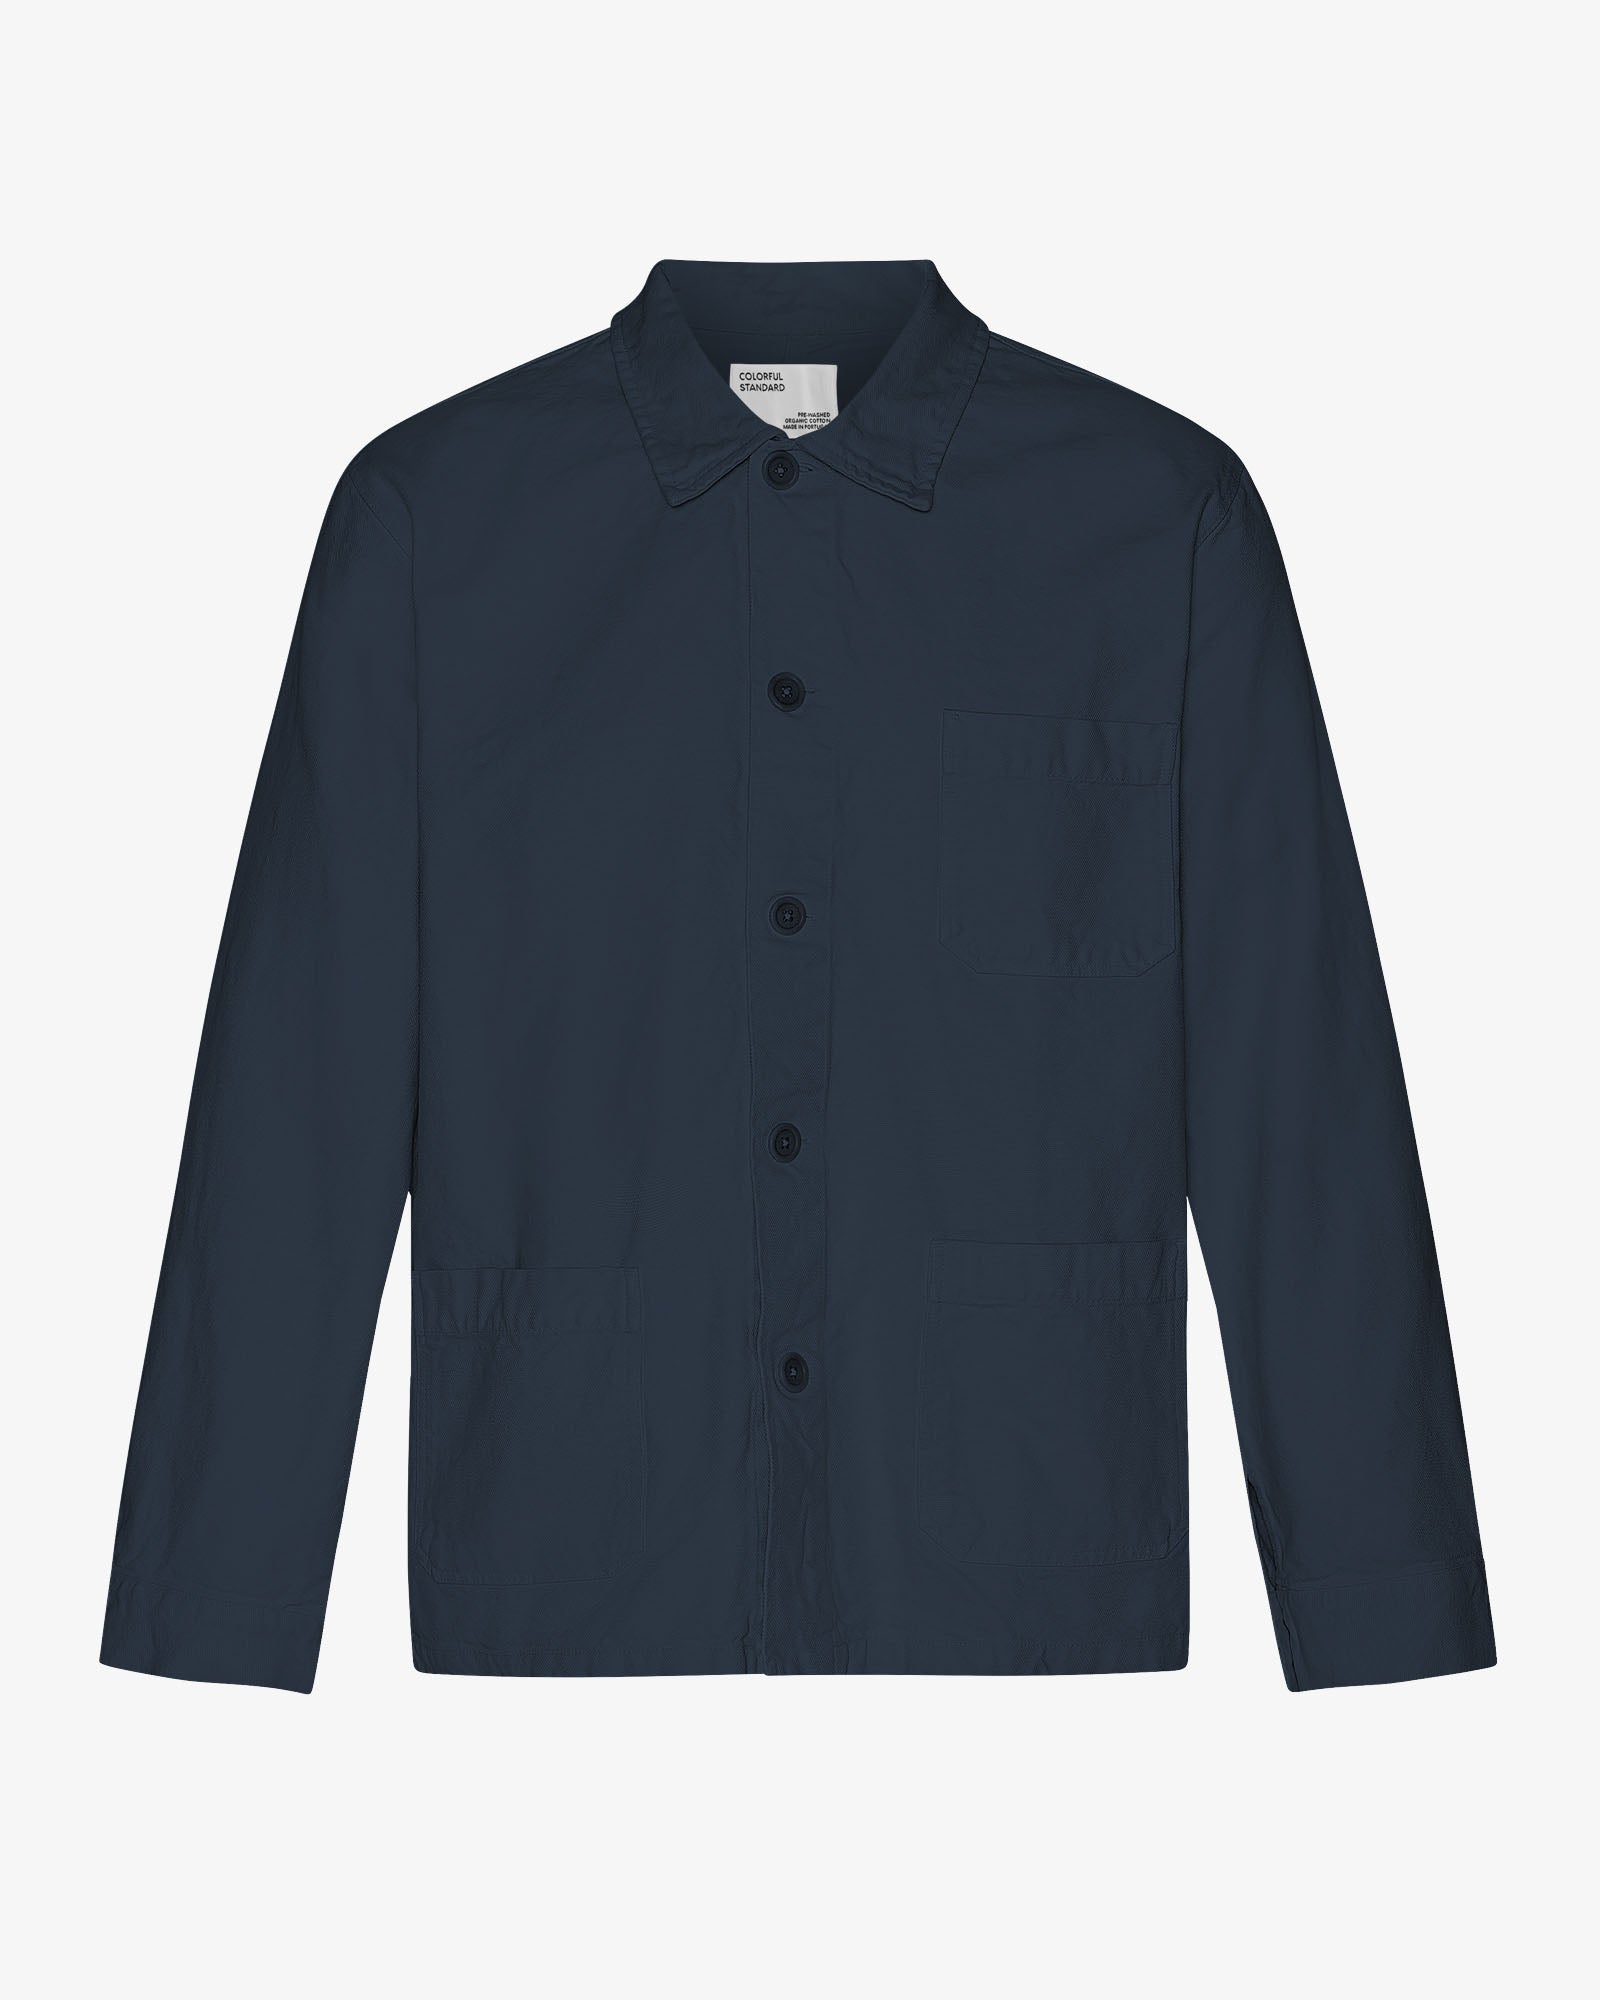 Organic Workwear Jacket - Navy Blue